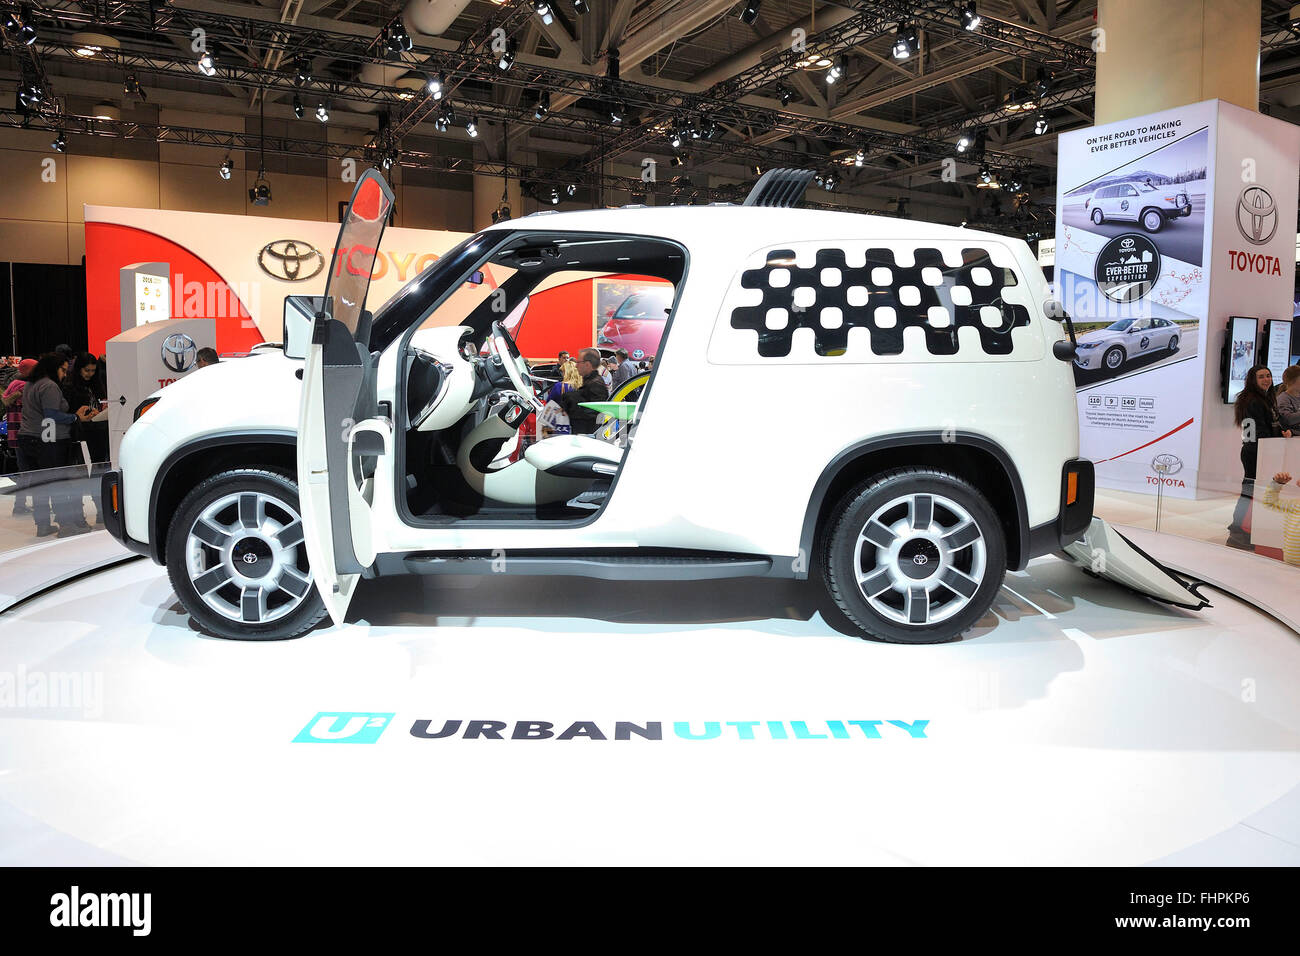 Urban toyota car -Fotos und -Bildmaterial in hoher Auflösung – Alamy